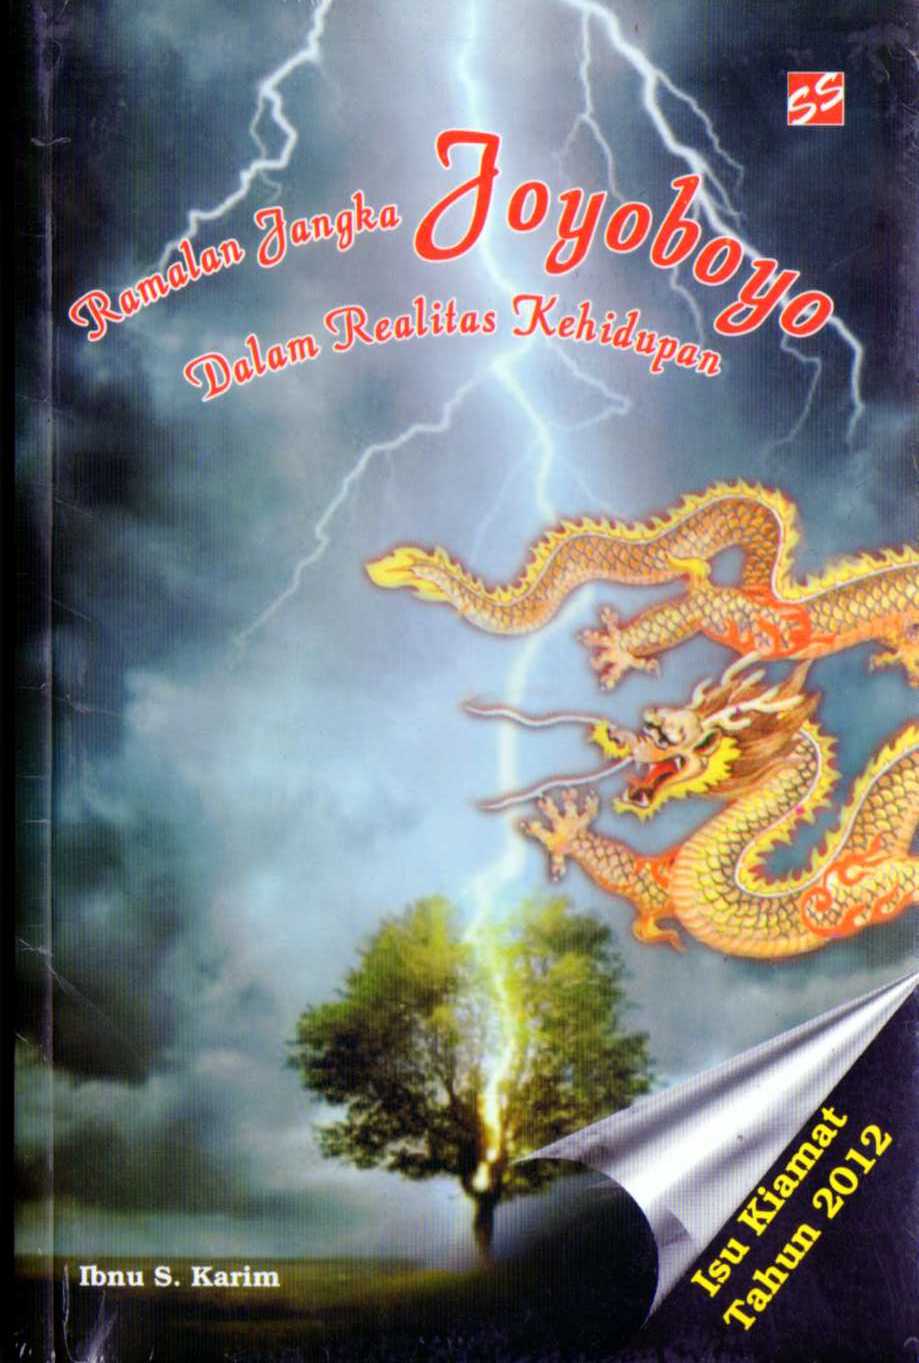 Diandrabooks; Distributor & Penerbit.: RAMALAN JONGKO 